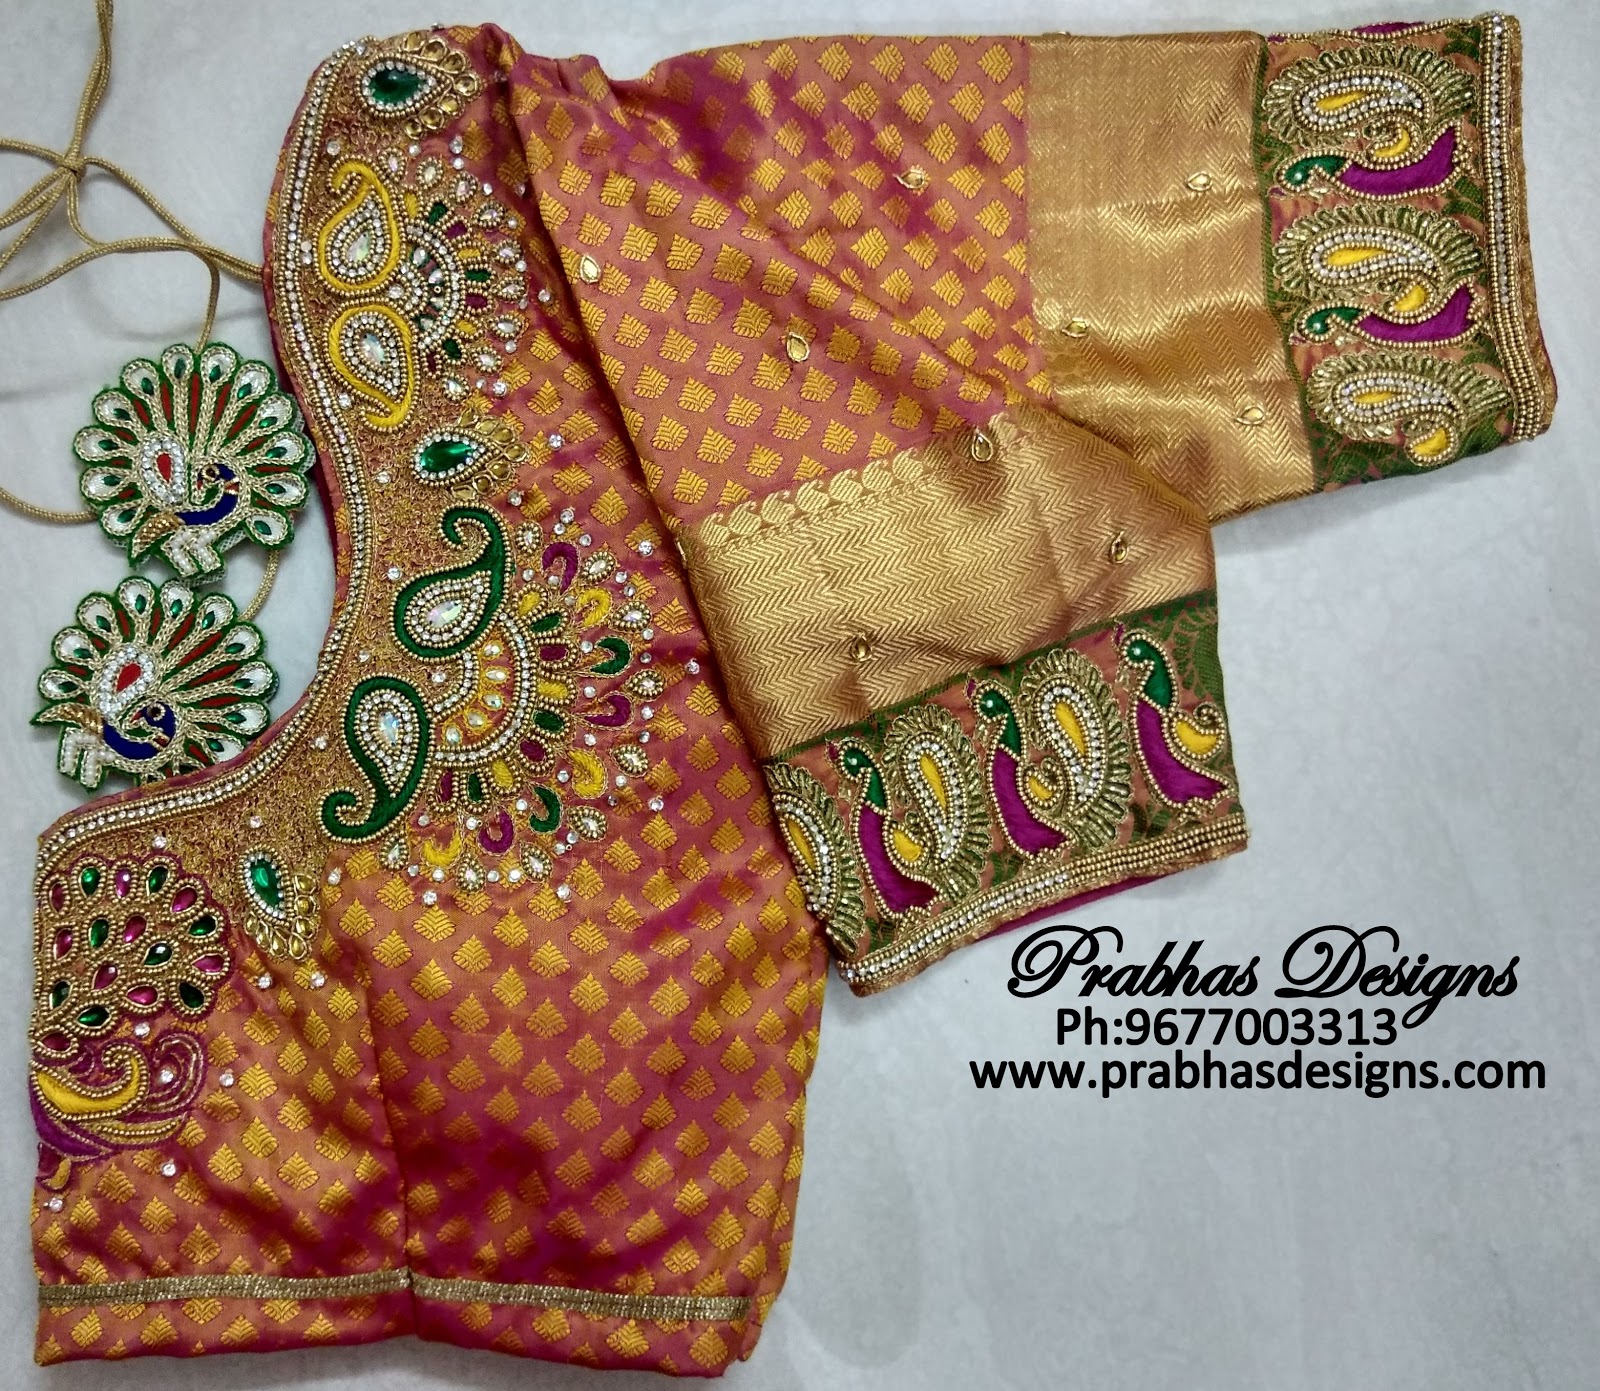 Aari Embroidery classes by Prabhas Designs: Annam Designed Aari ...